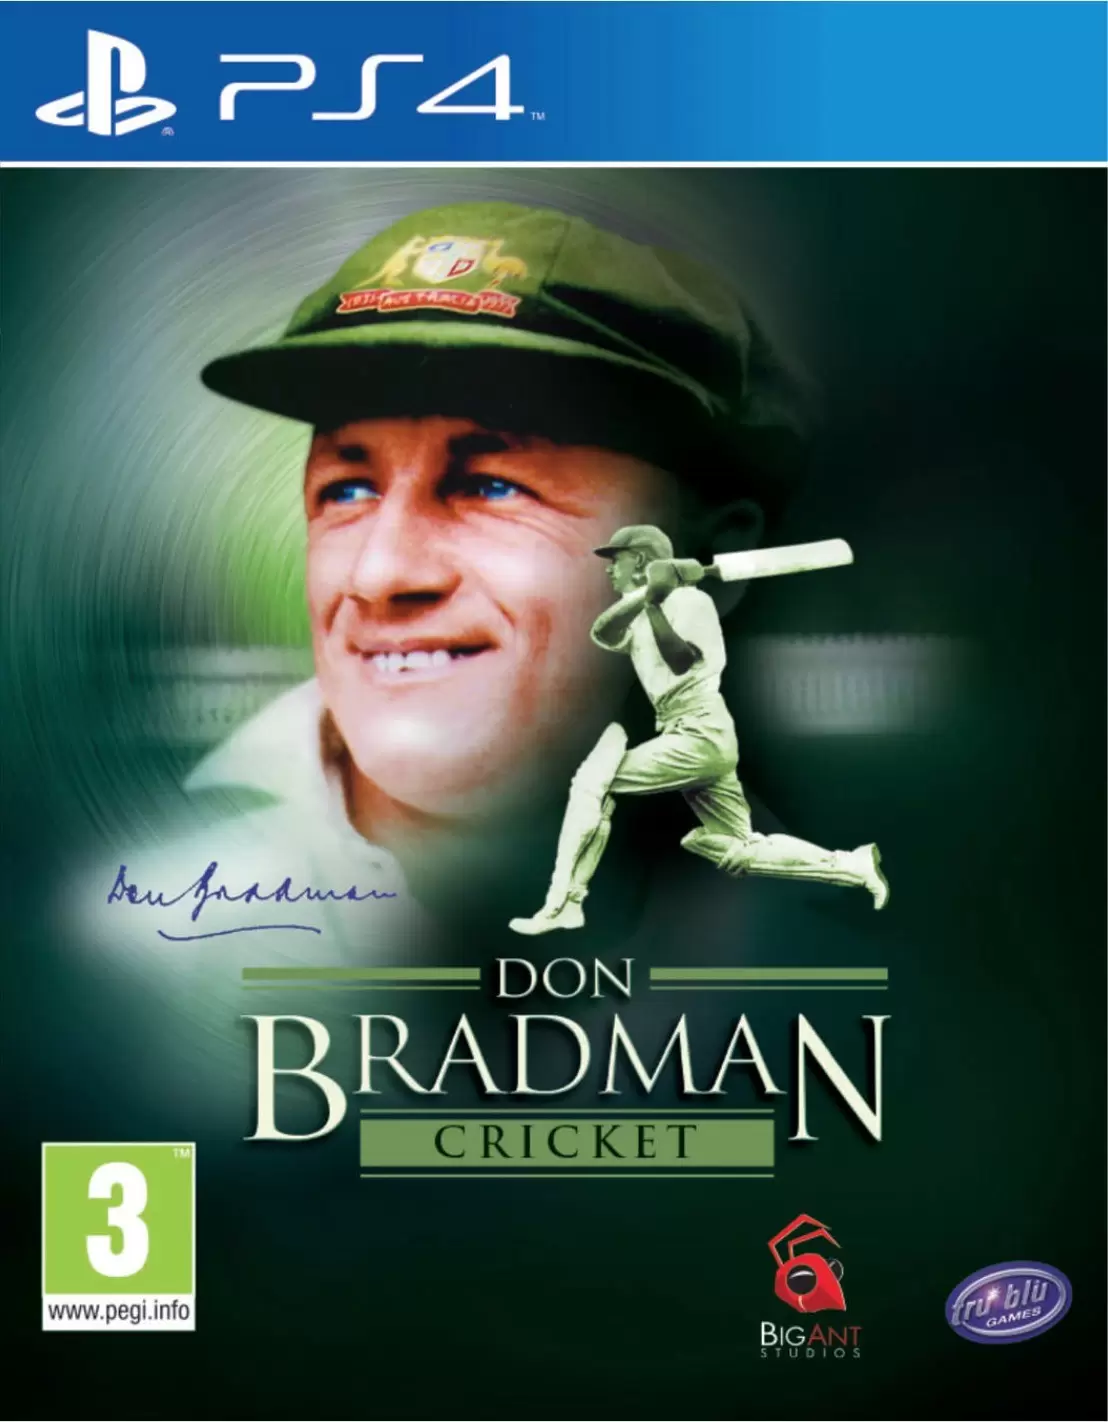 PS4 Games - Don Bradman Cricket